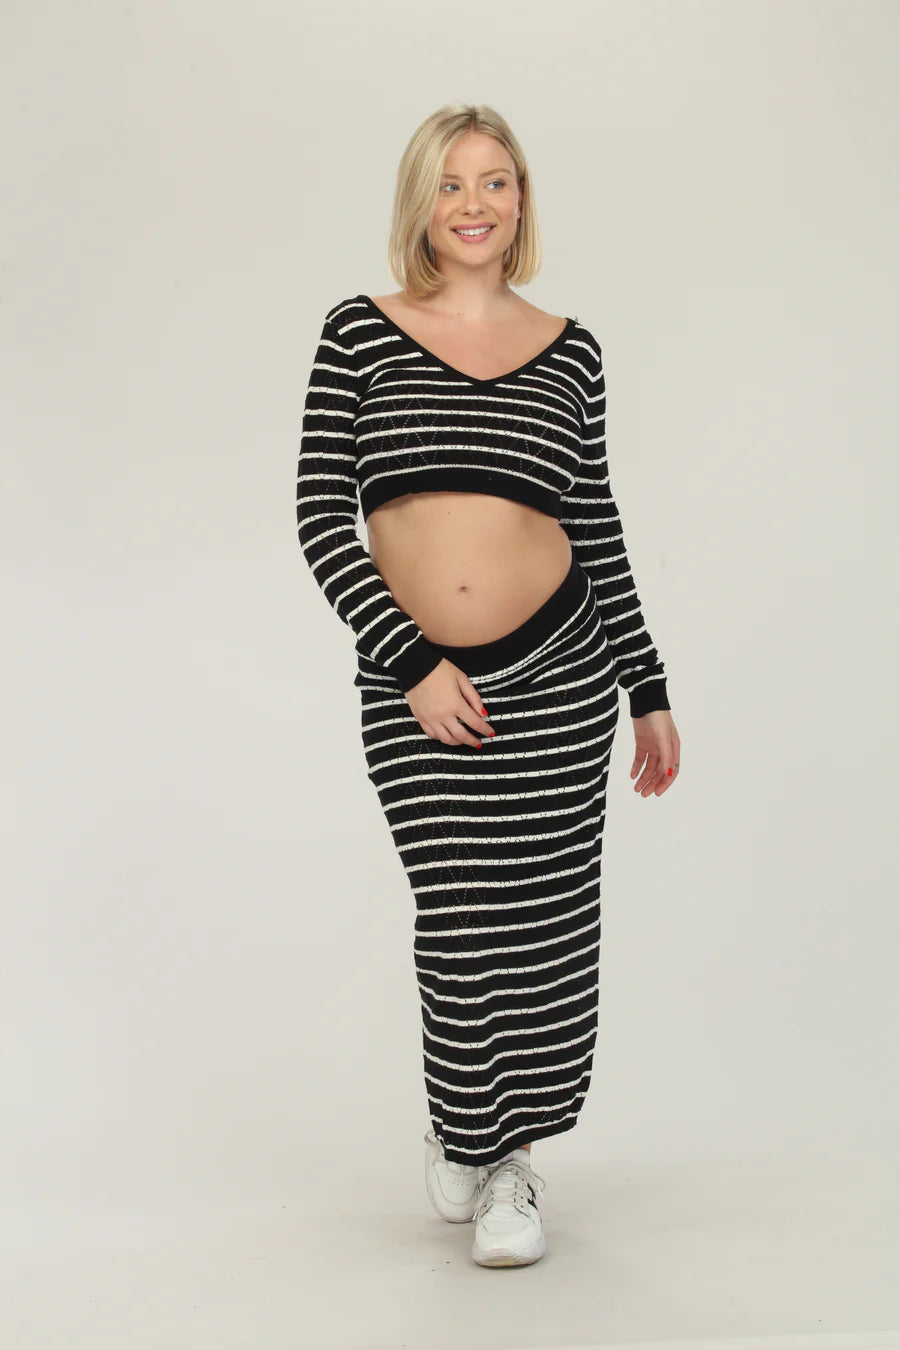 Boho Top and Skirt Set Pregnancy Dress for Photo Shoot Maternity